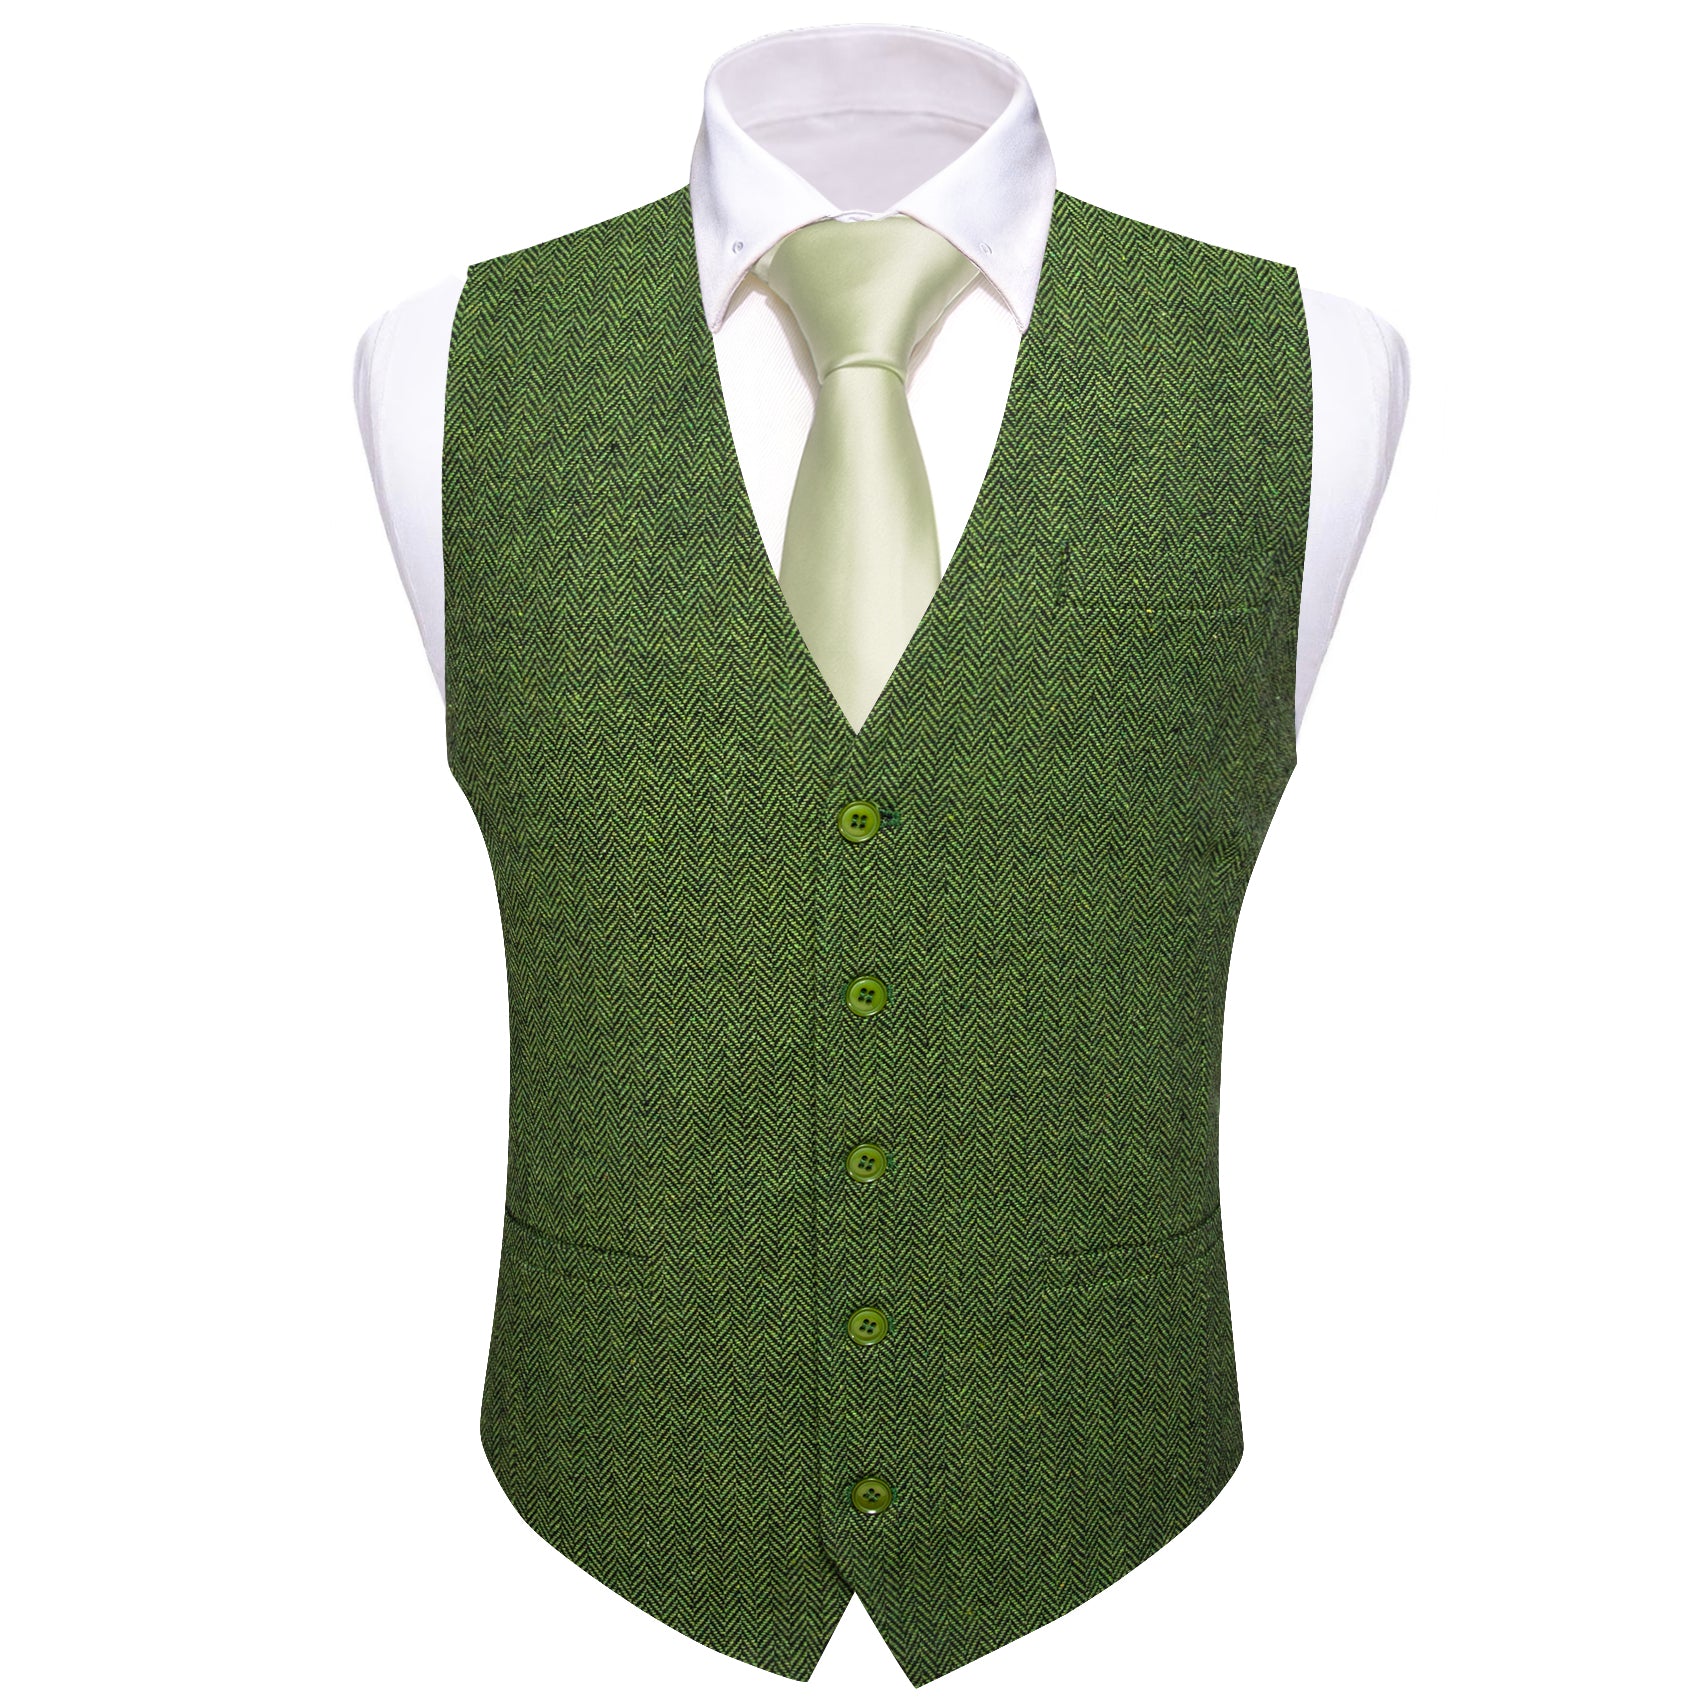 Barry.wang Men‘s Luxury Green Solid Waistcoat Vest